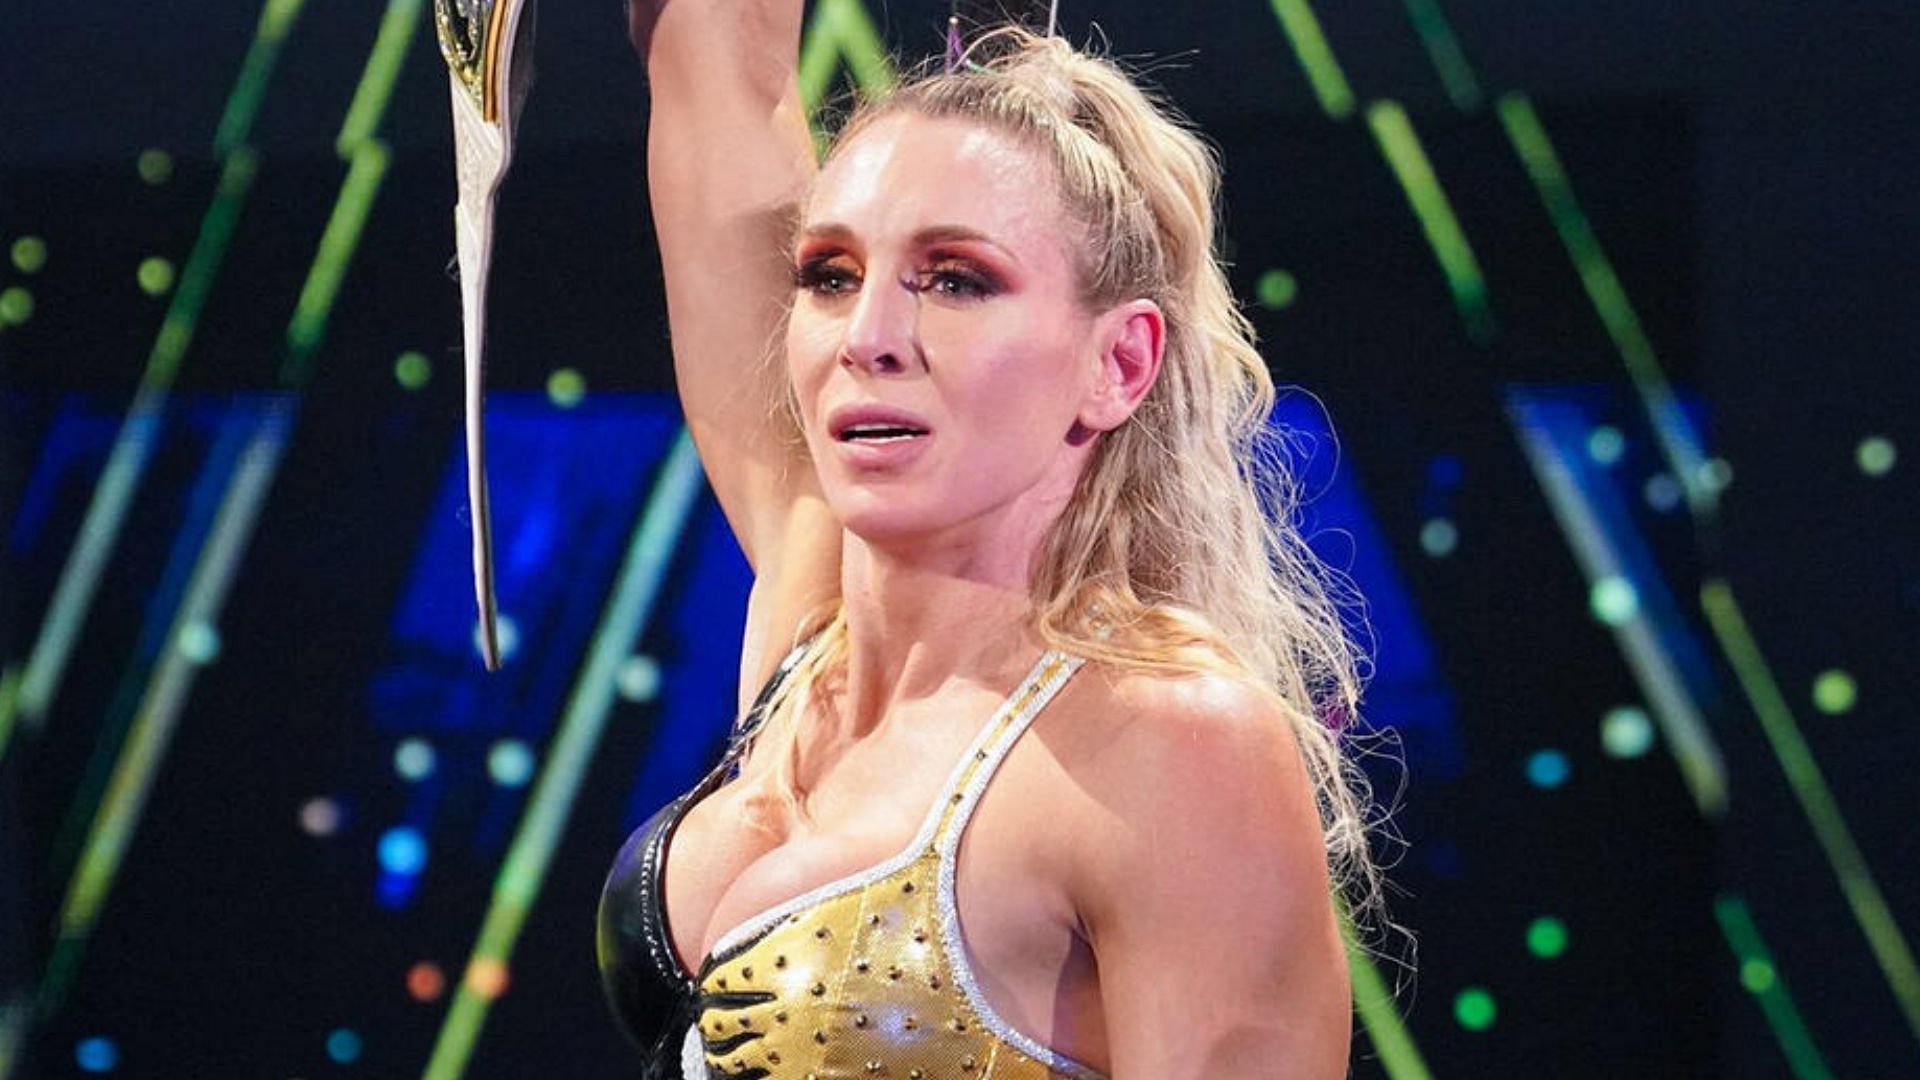 14-time WWE Women